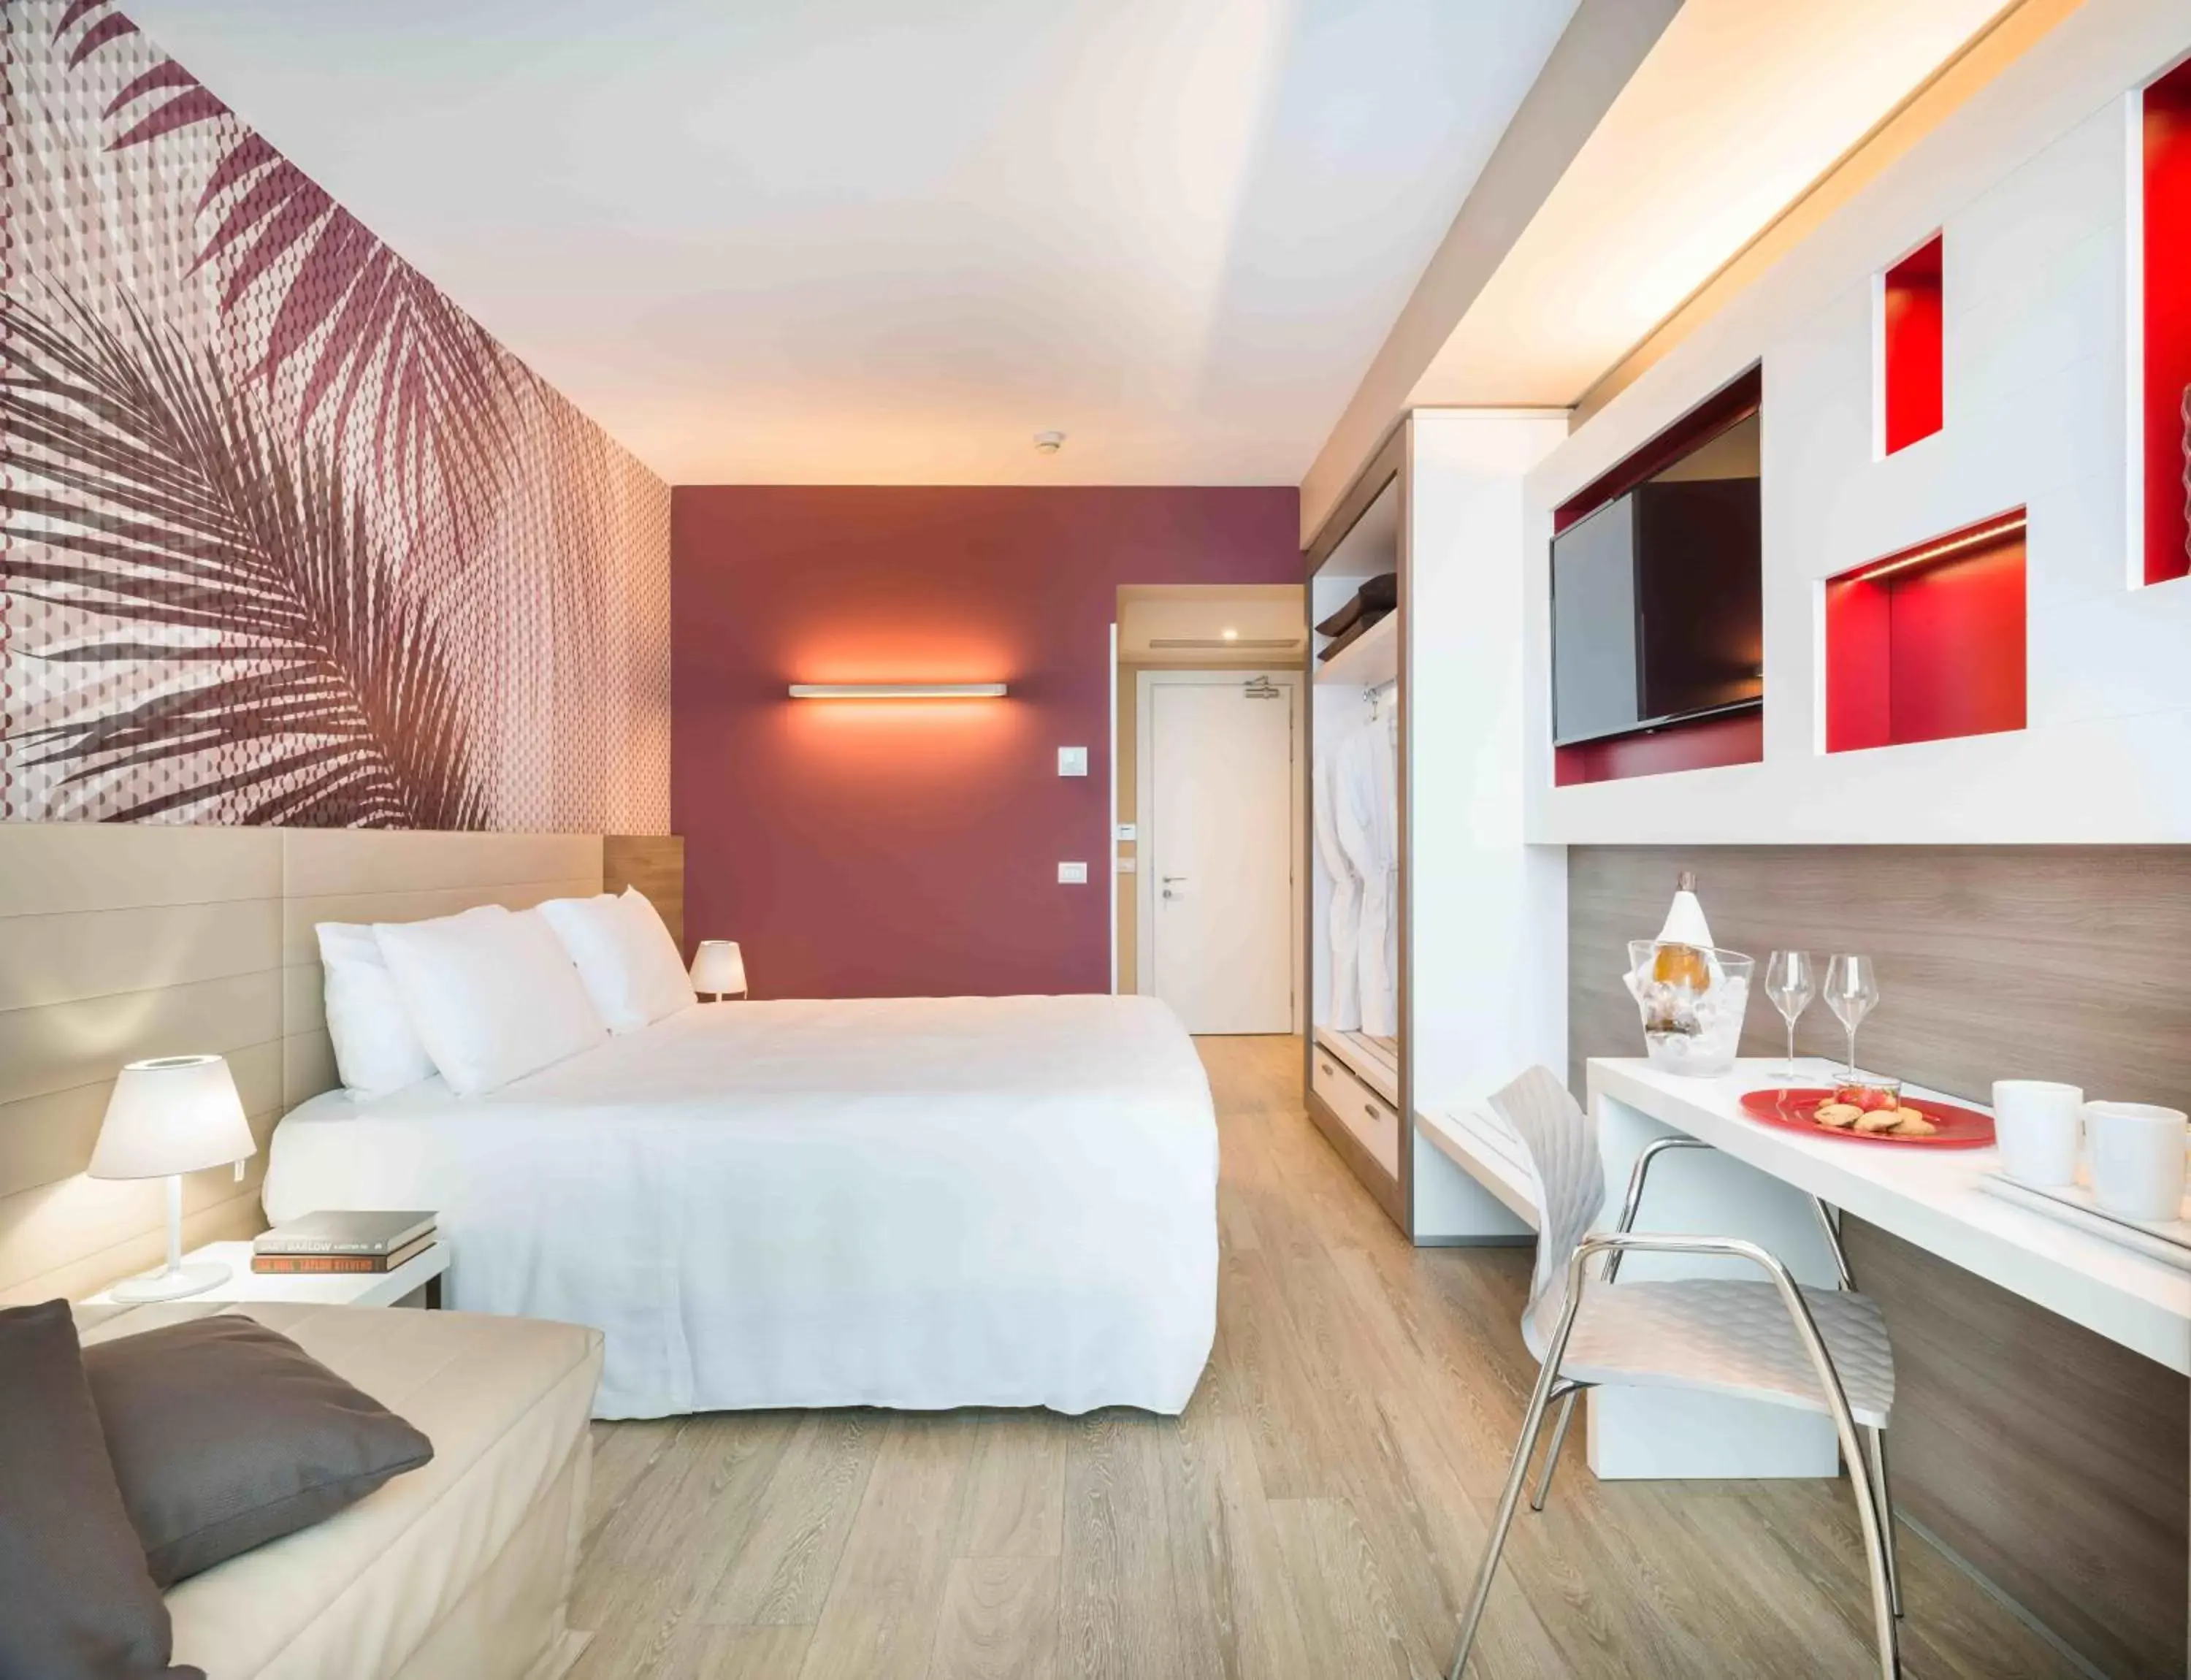 Bedroom in Enjoy Garda Hotel